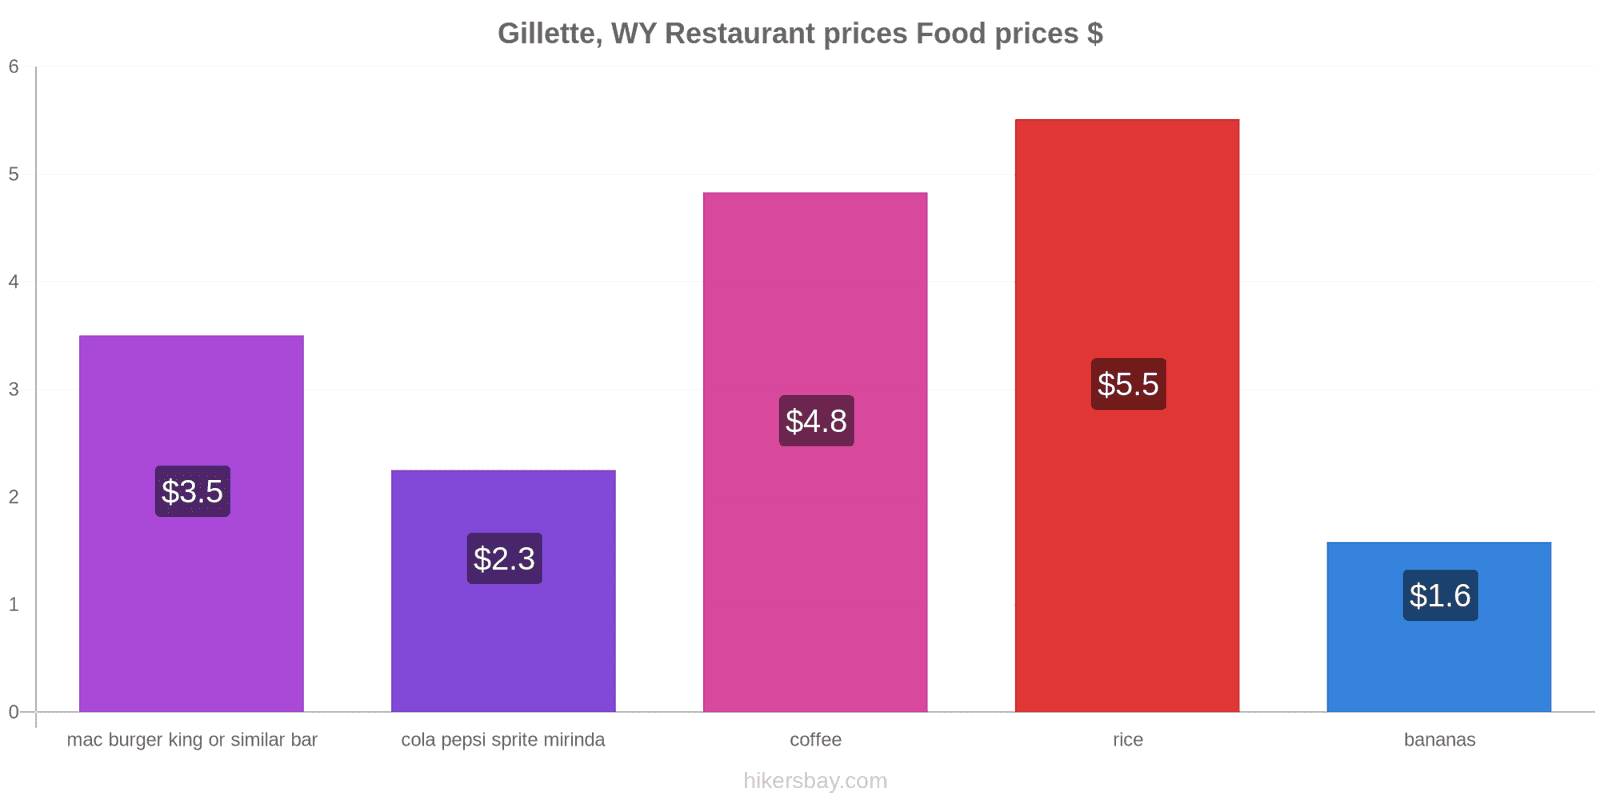 Gillette, WY price changes hikersbay.com